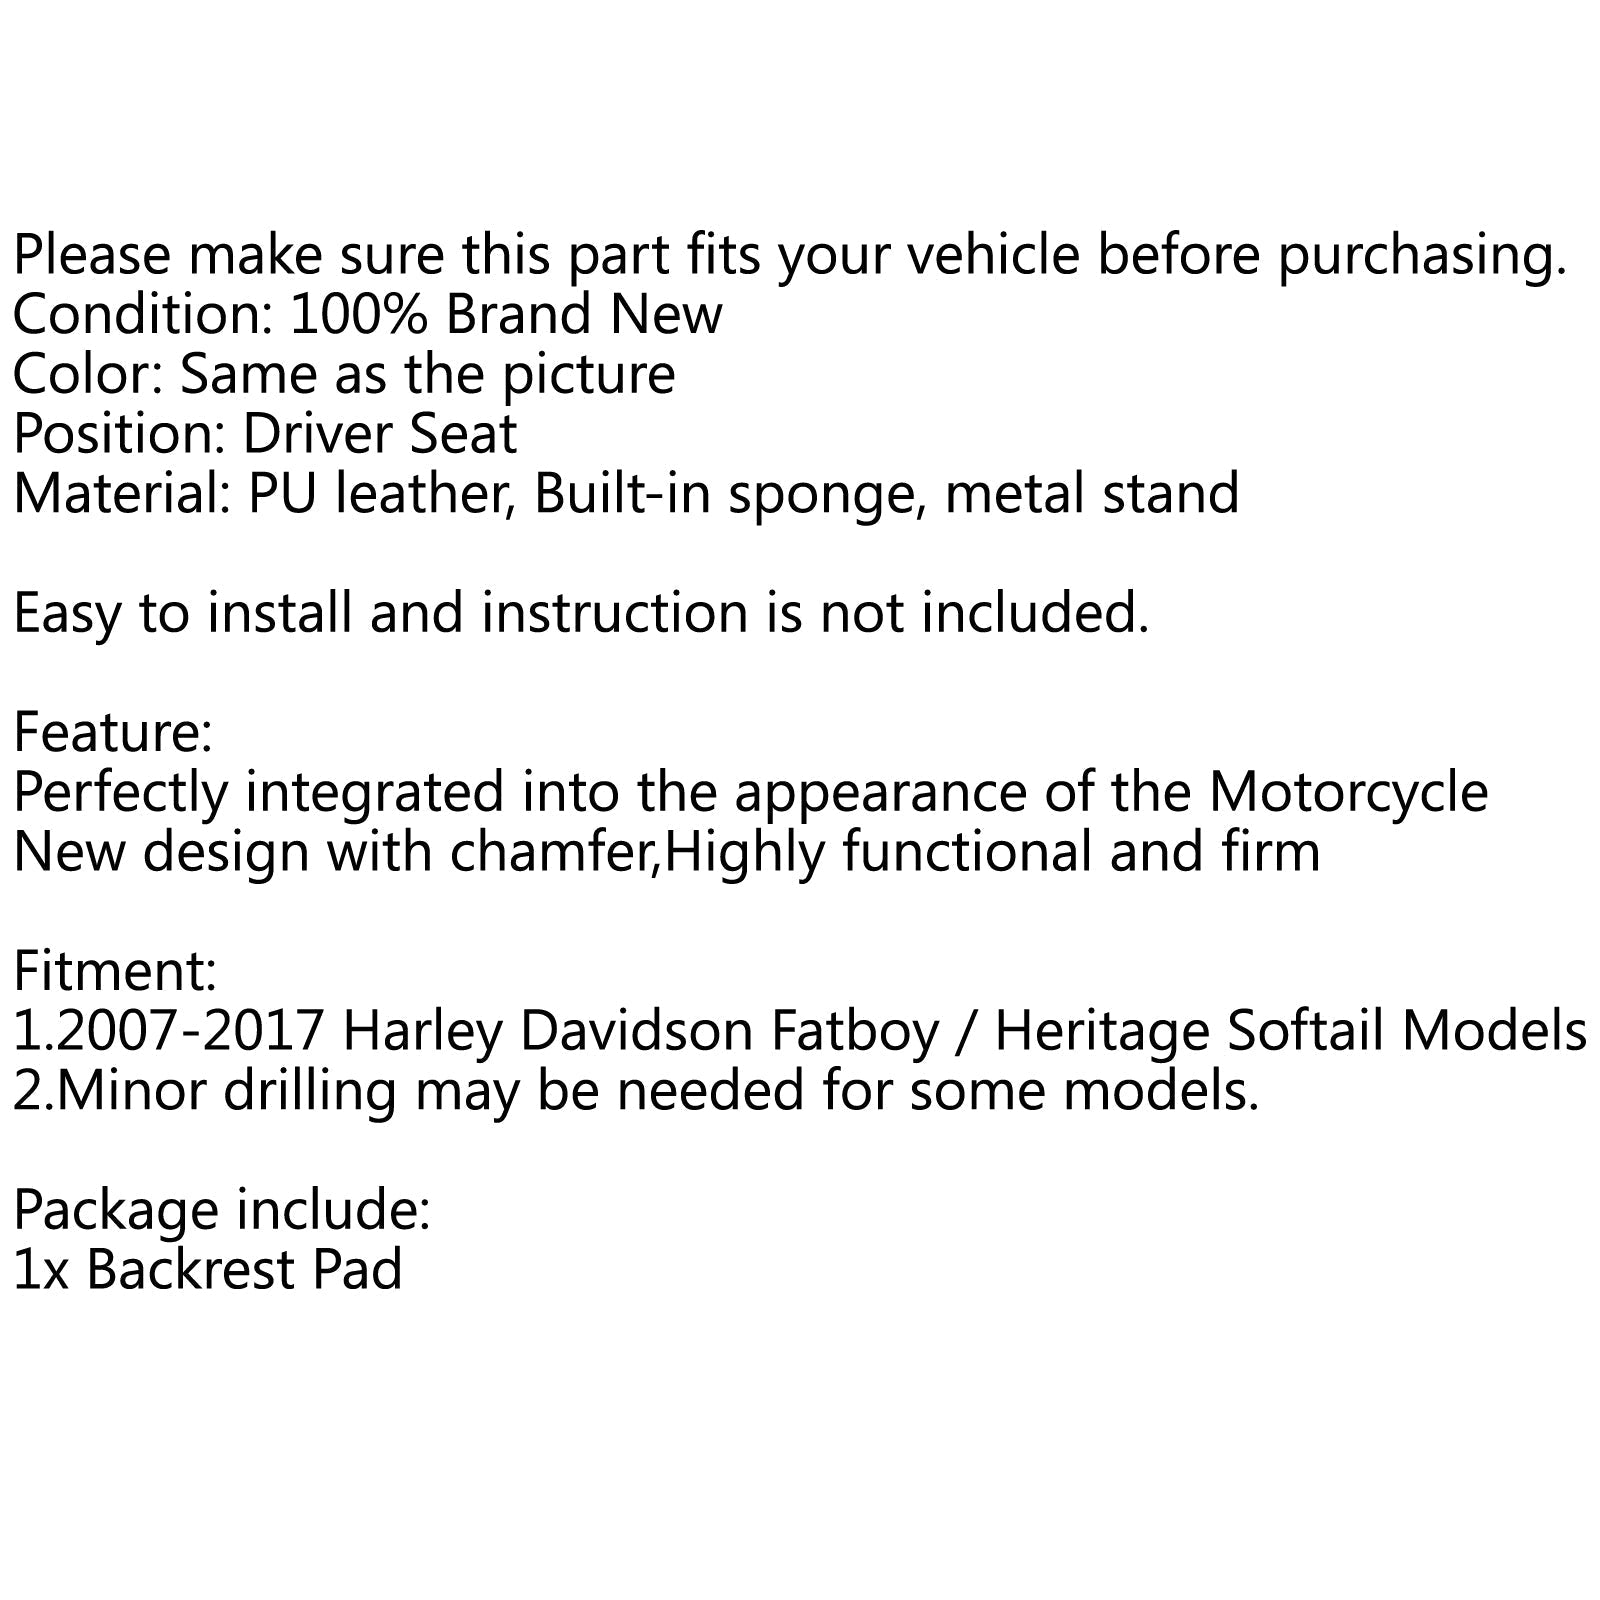 Cuscino schienale sedile conducente per 07-17 Harley Fatboy FLSTF Heritage Softail generico